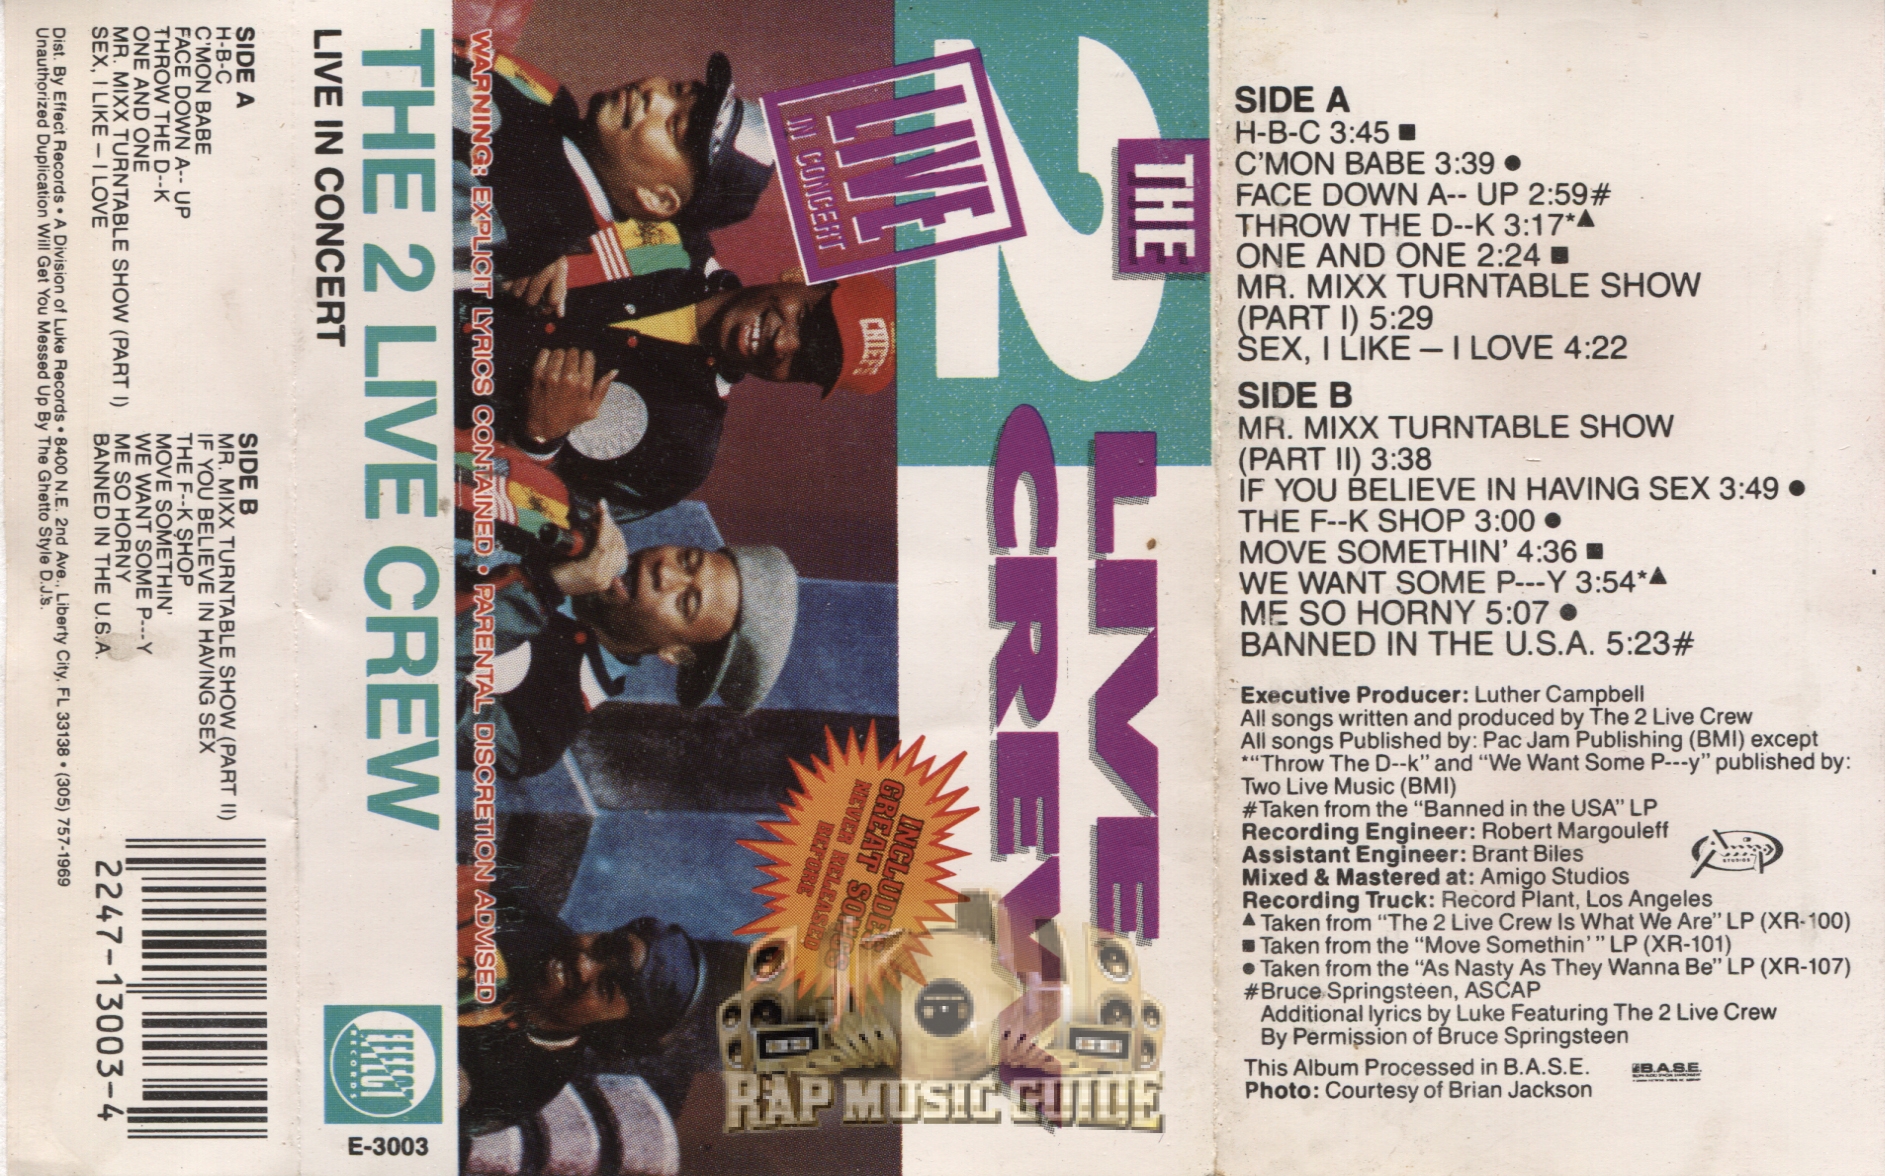 2 Live Crew   Live In Concert: Cassette Tape   Rap Music Guide